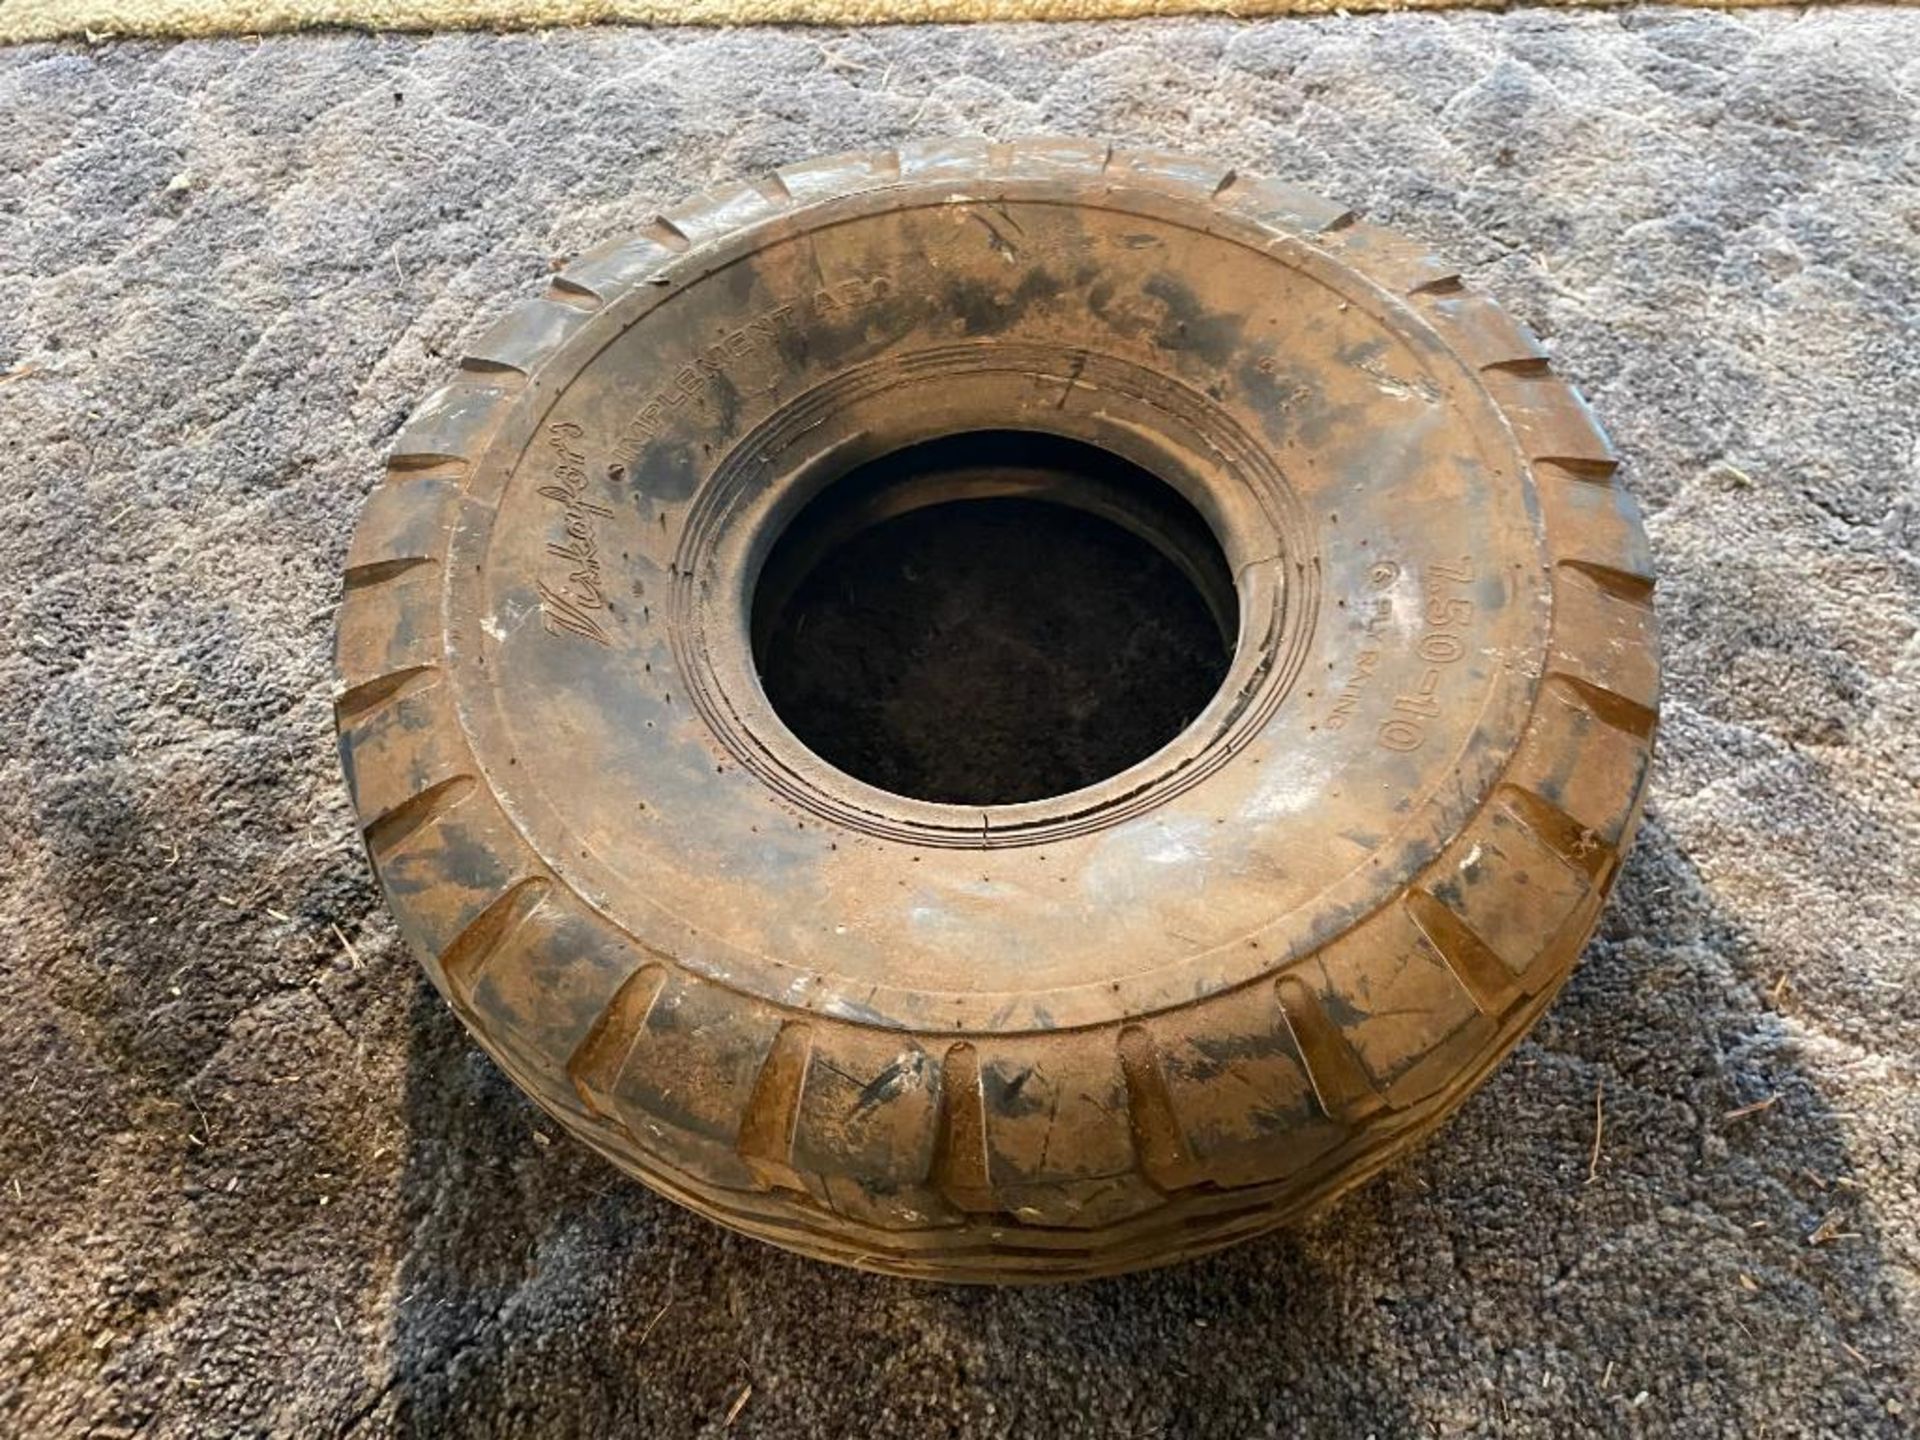 Single Viscafors 7.50-16 tyre - Image 2 of 2